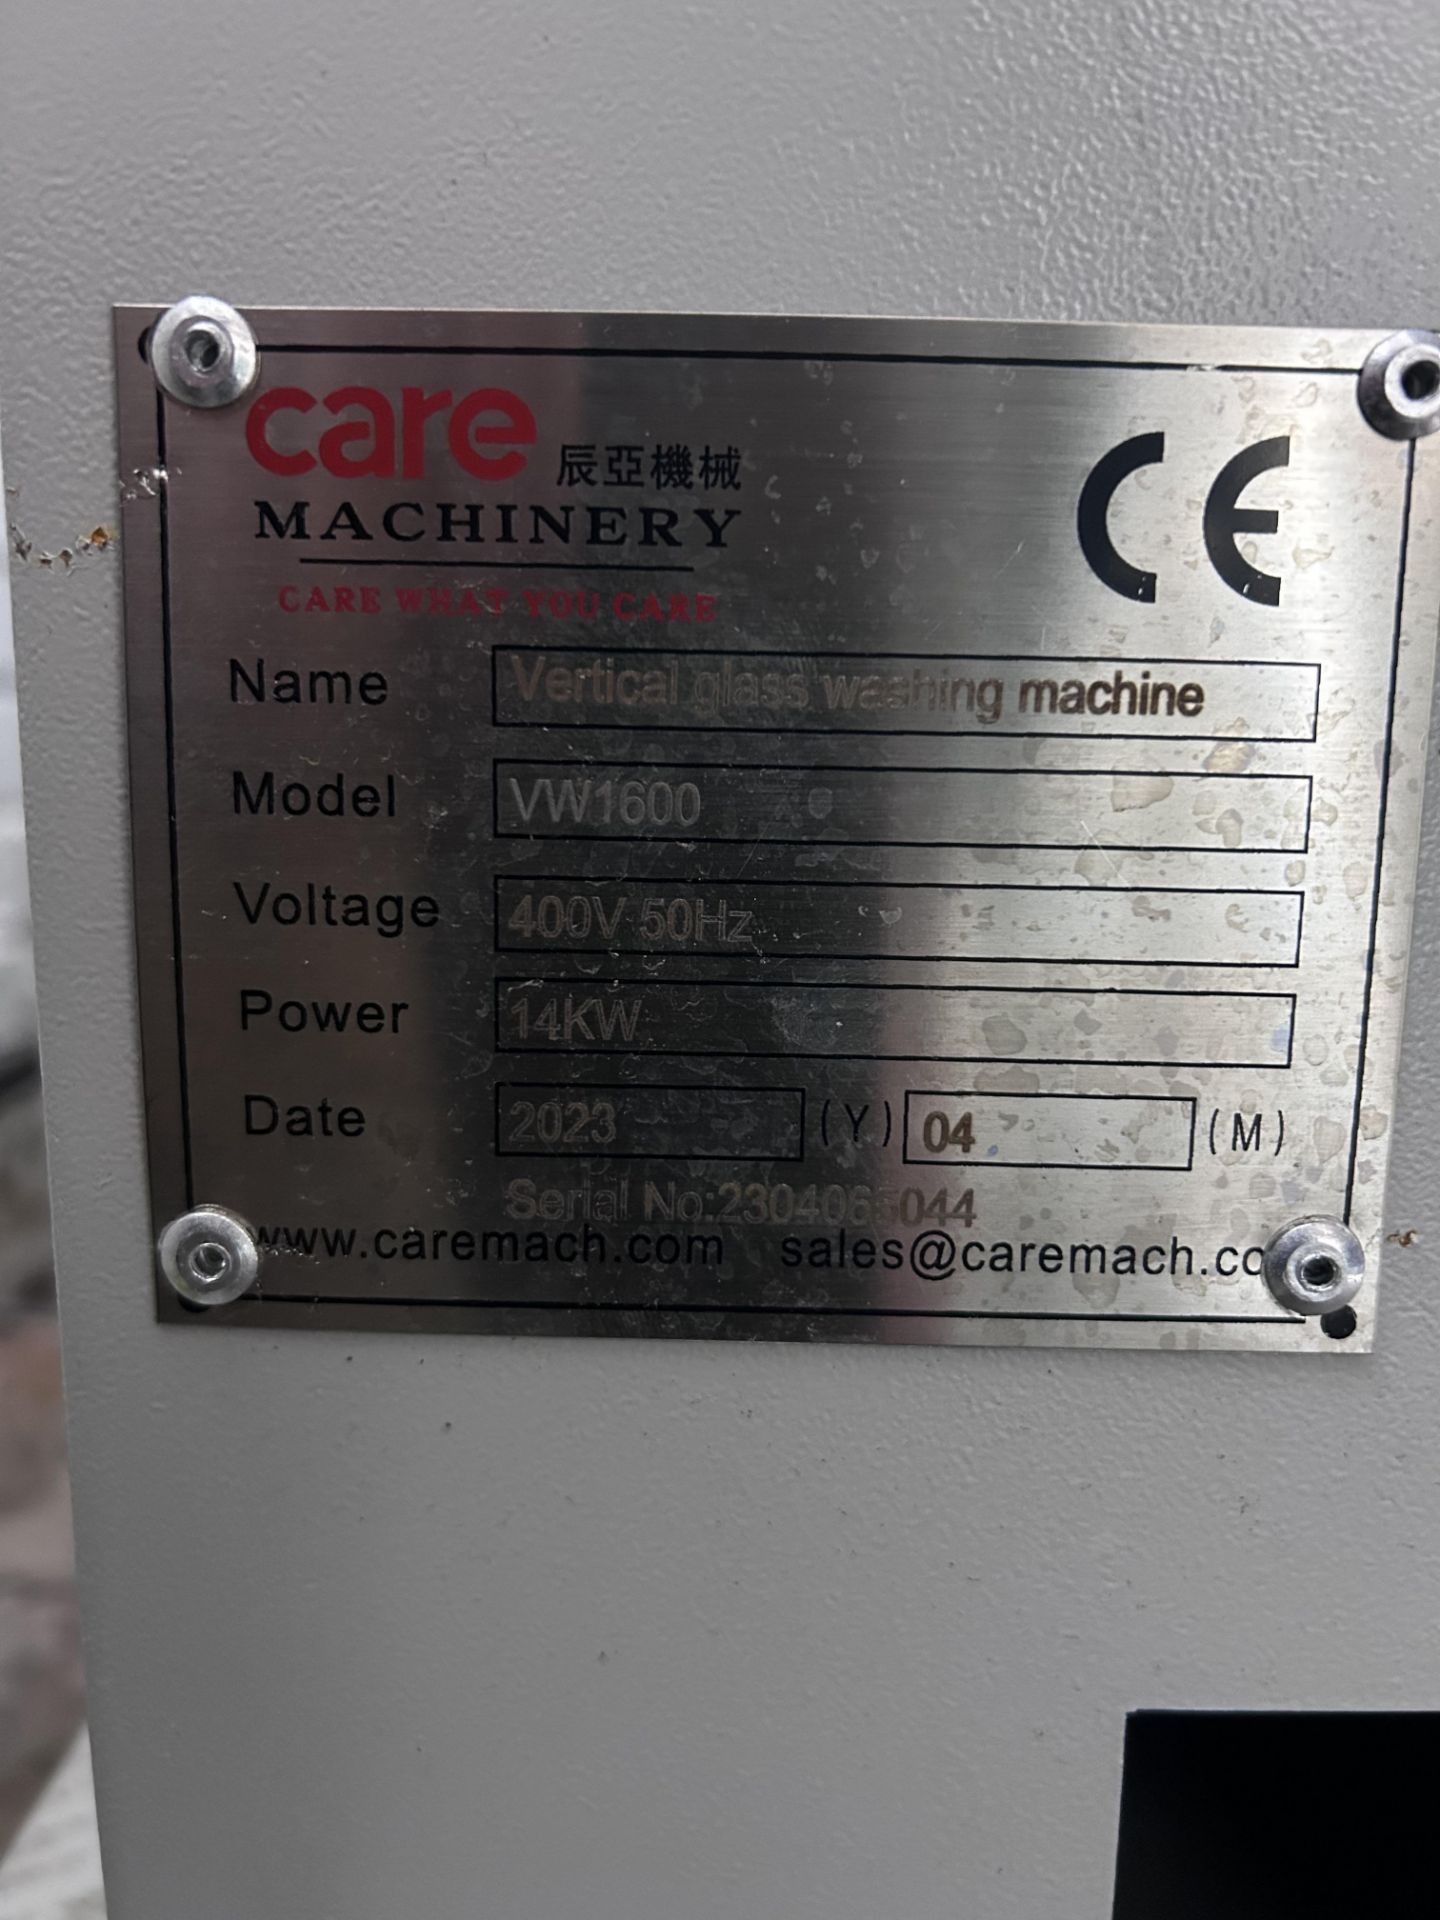 CARE MACHINERY - 2023, Vertical Glass Washing Machine - Image 7 of 9